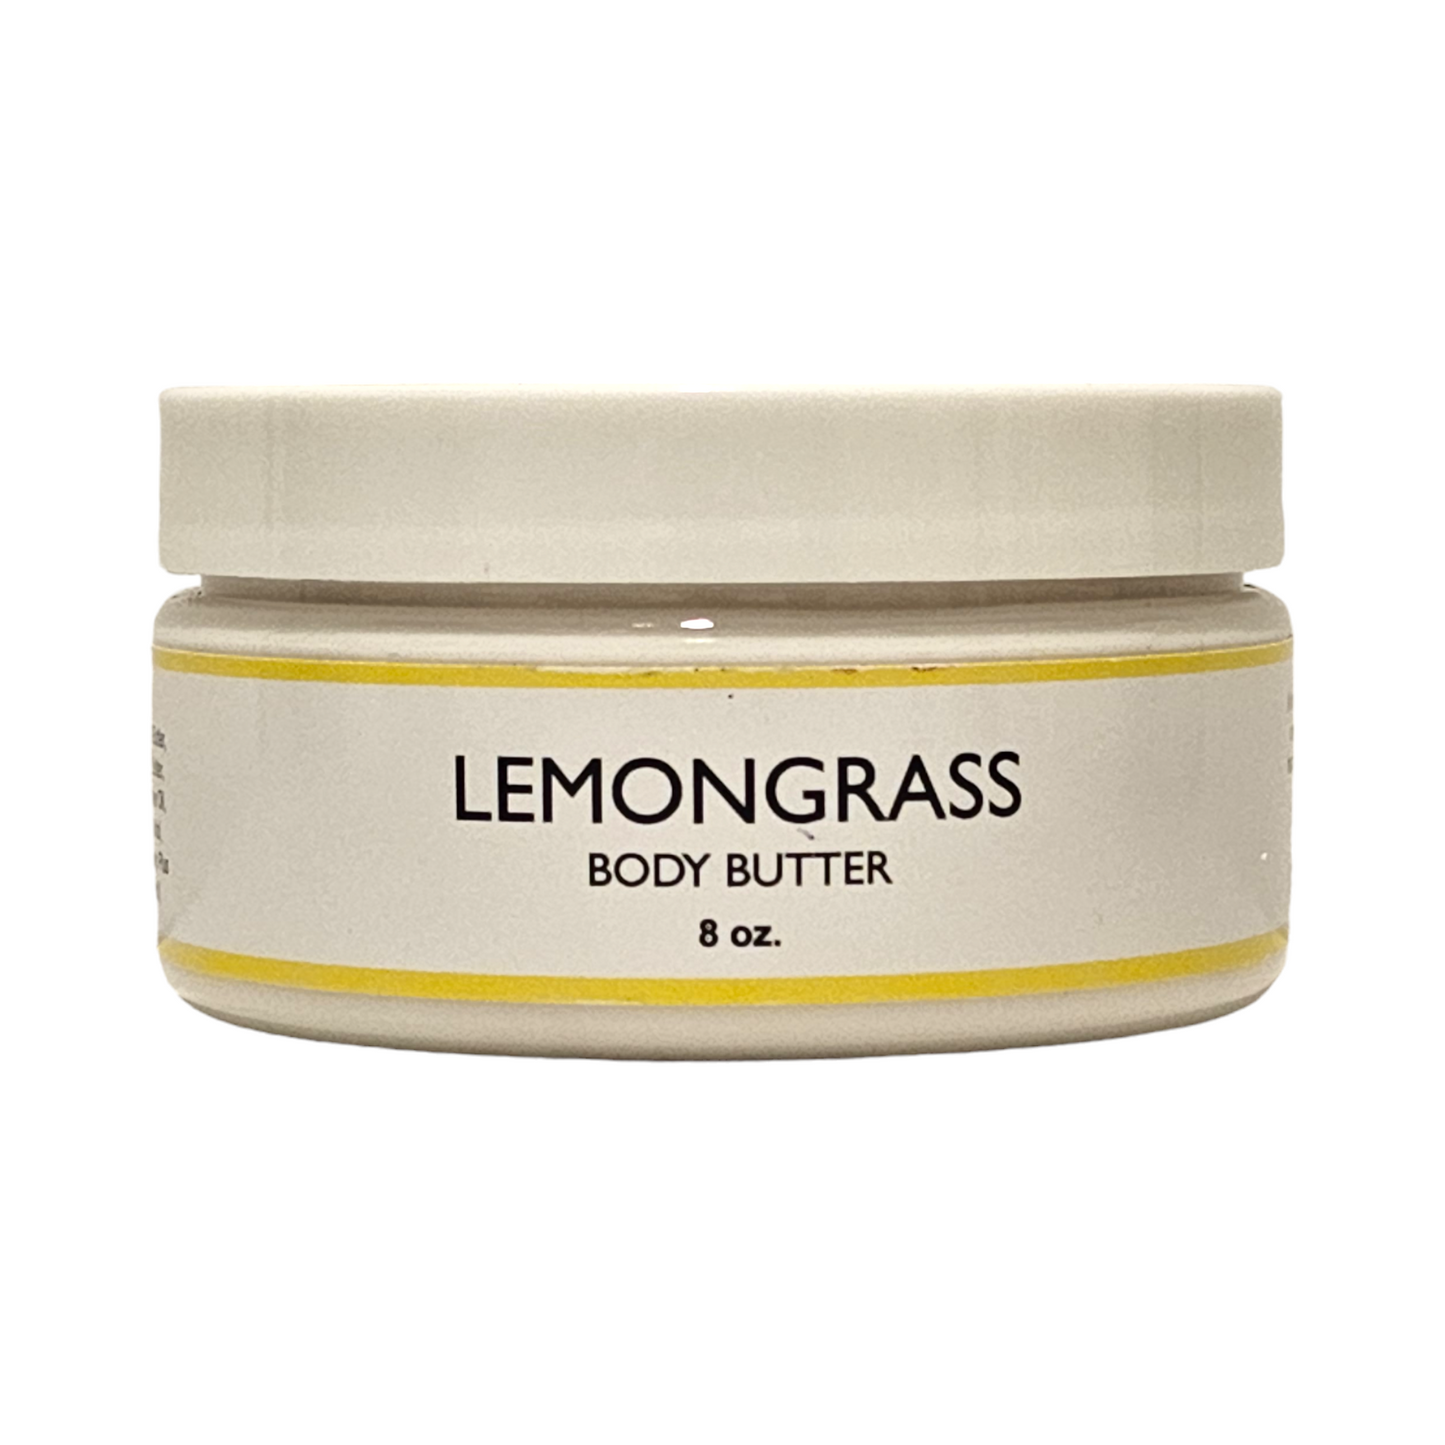 Sweet Lemongrass Body Butter